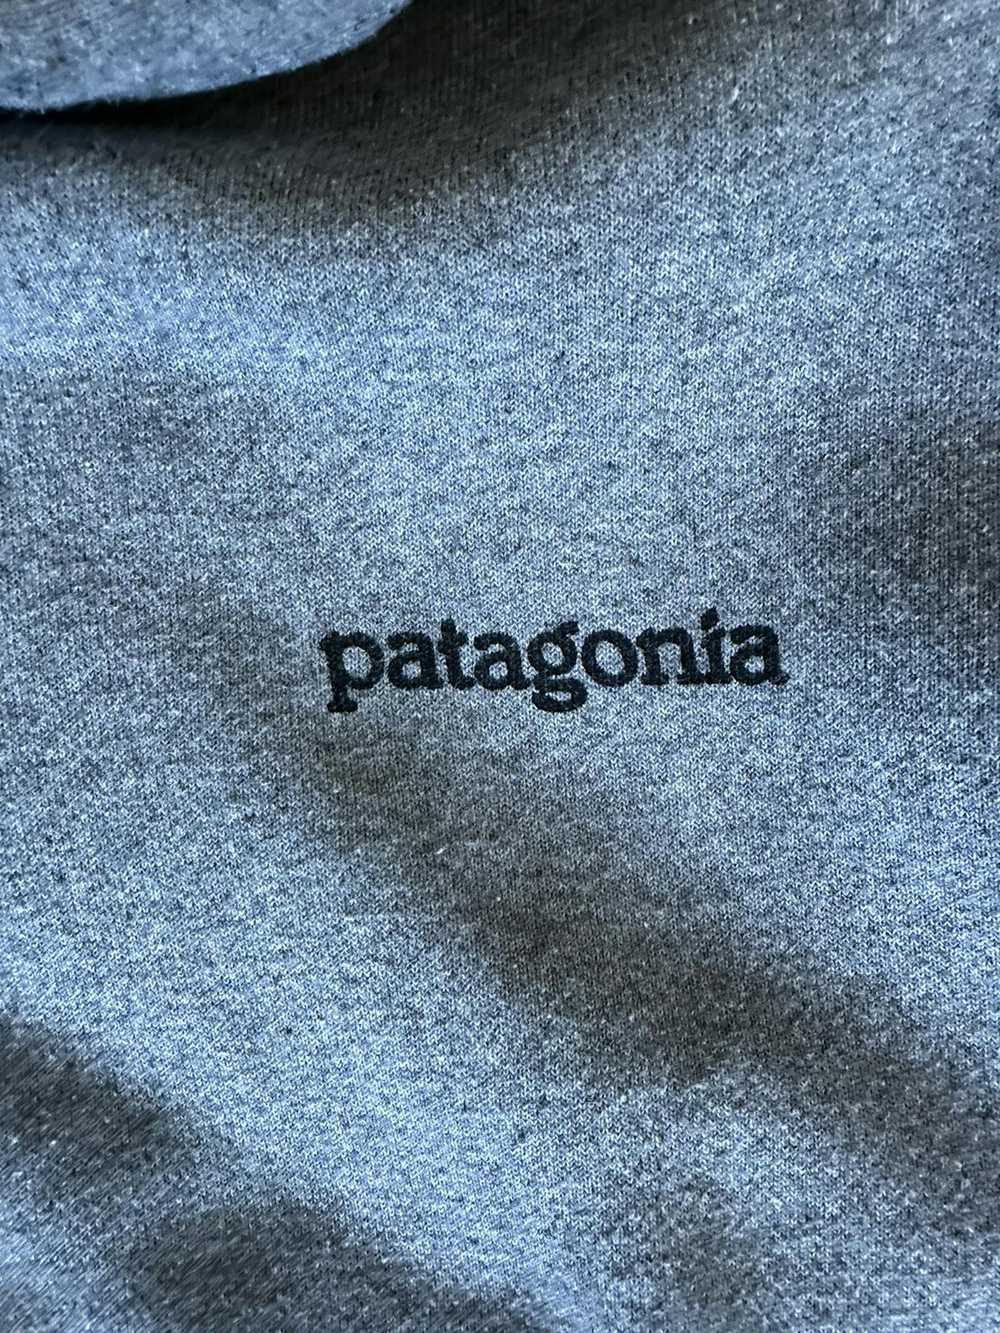 Patagonia Patagonia hoodie size small - image 3